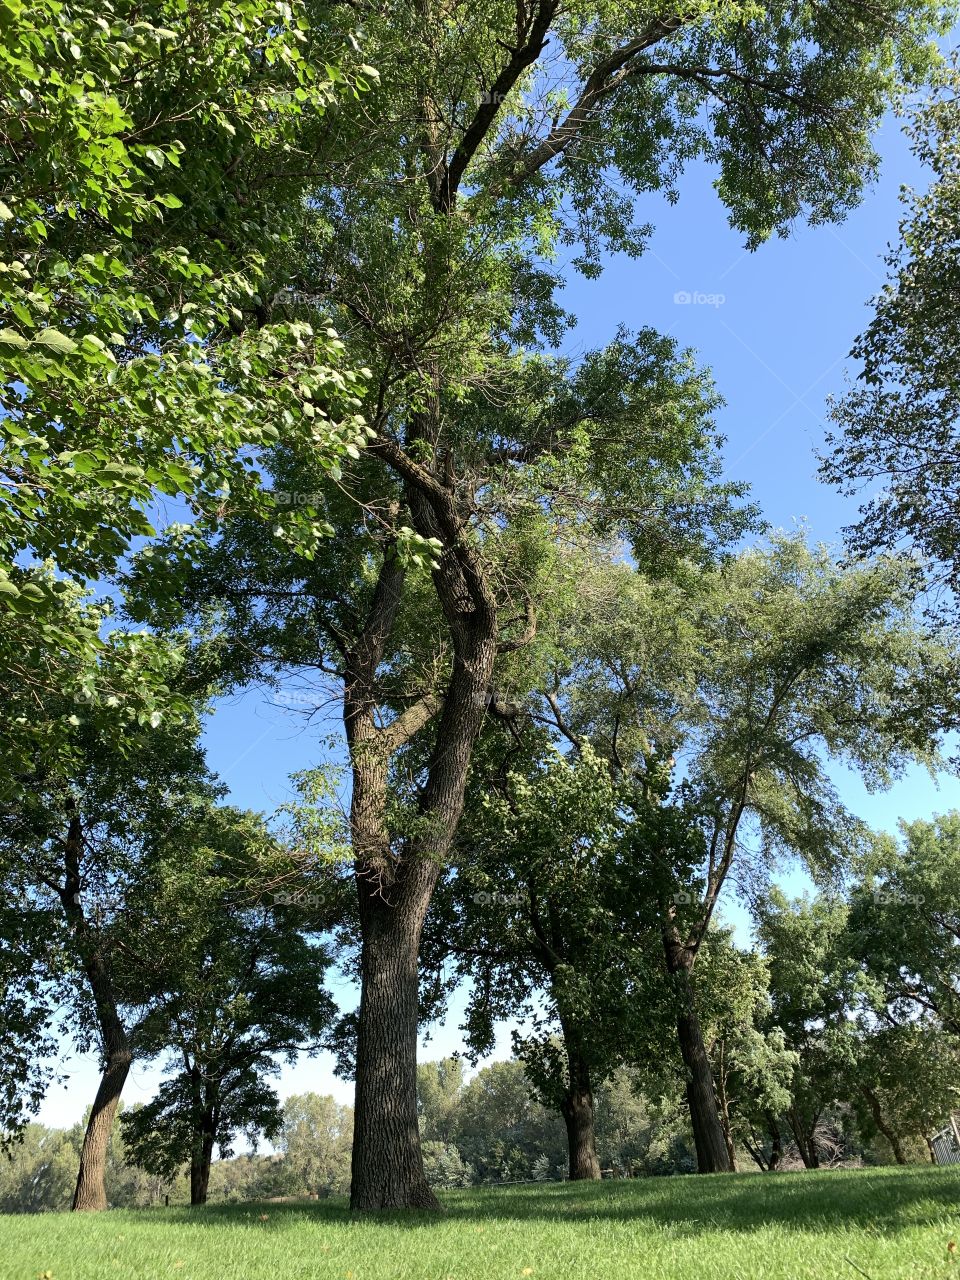 Tall leafy trees against a beautiful, blue sky